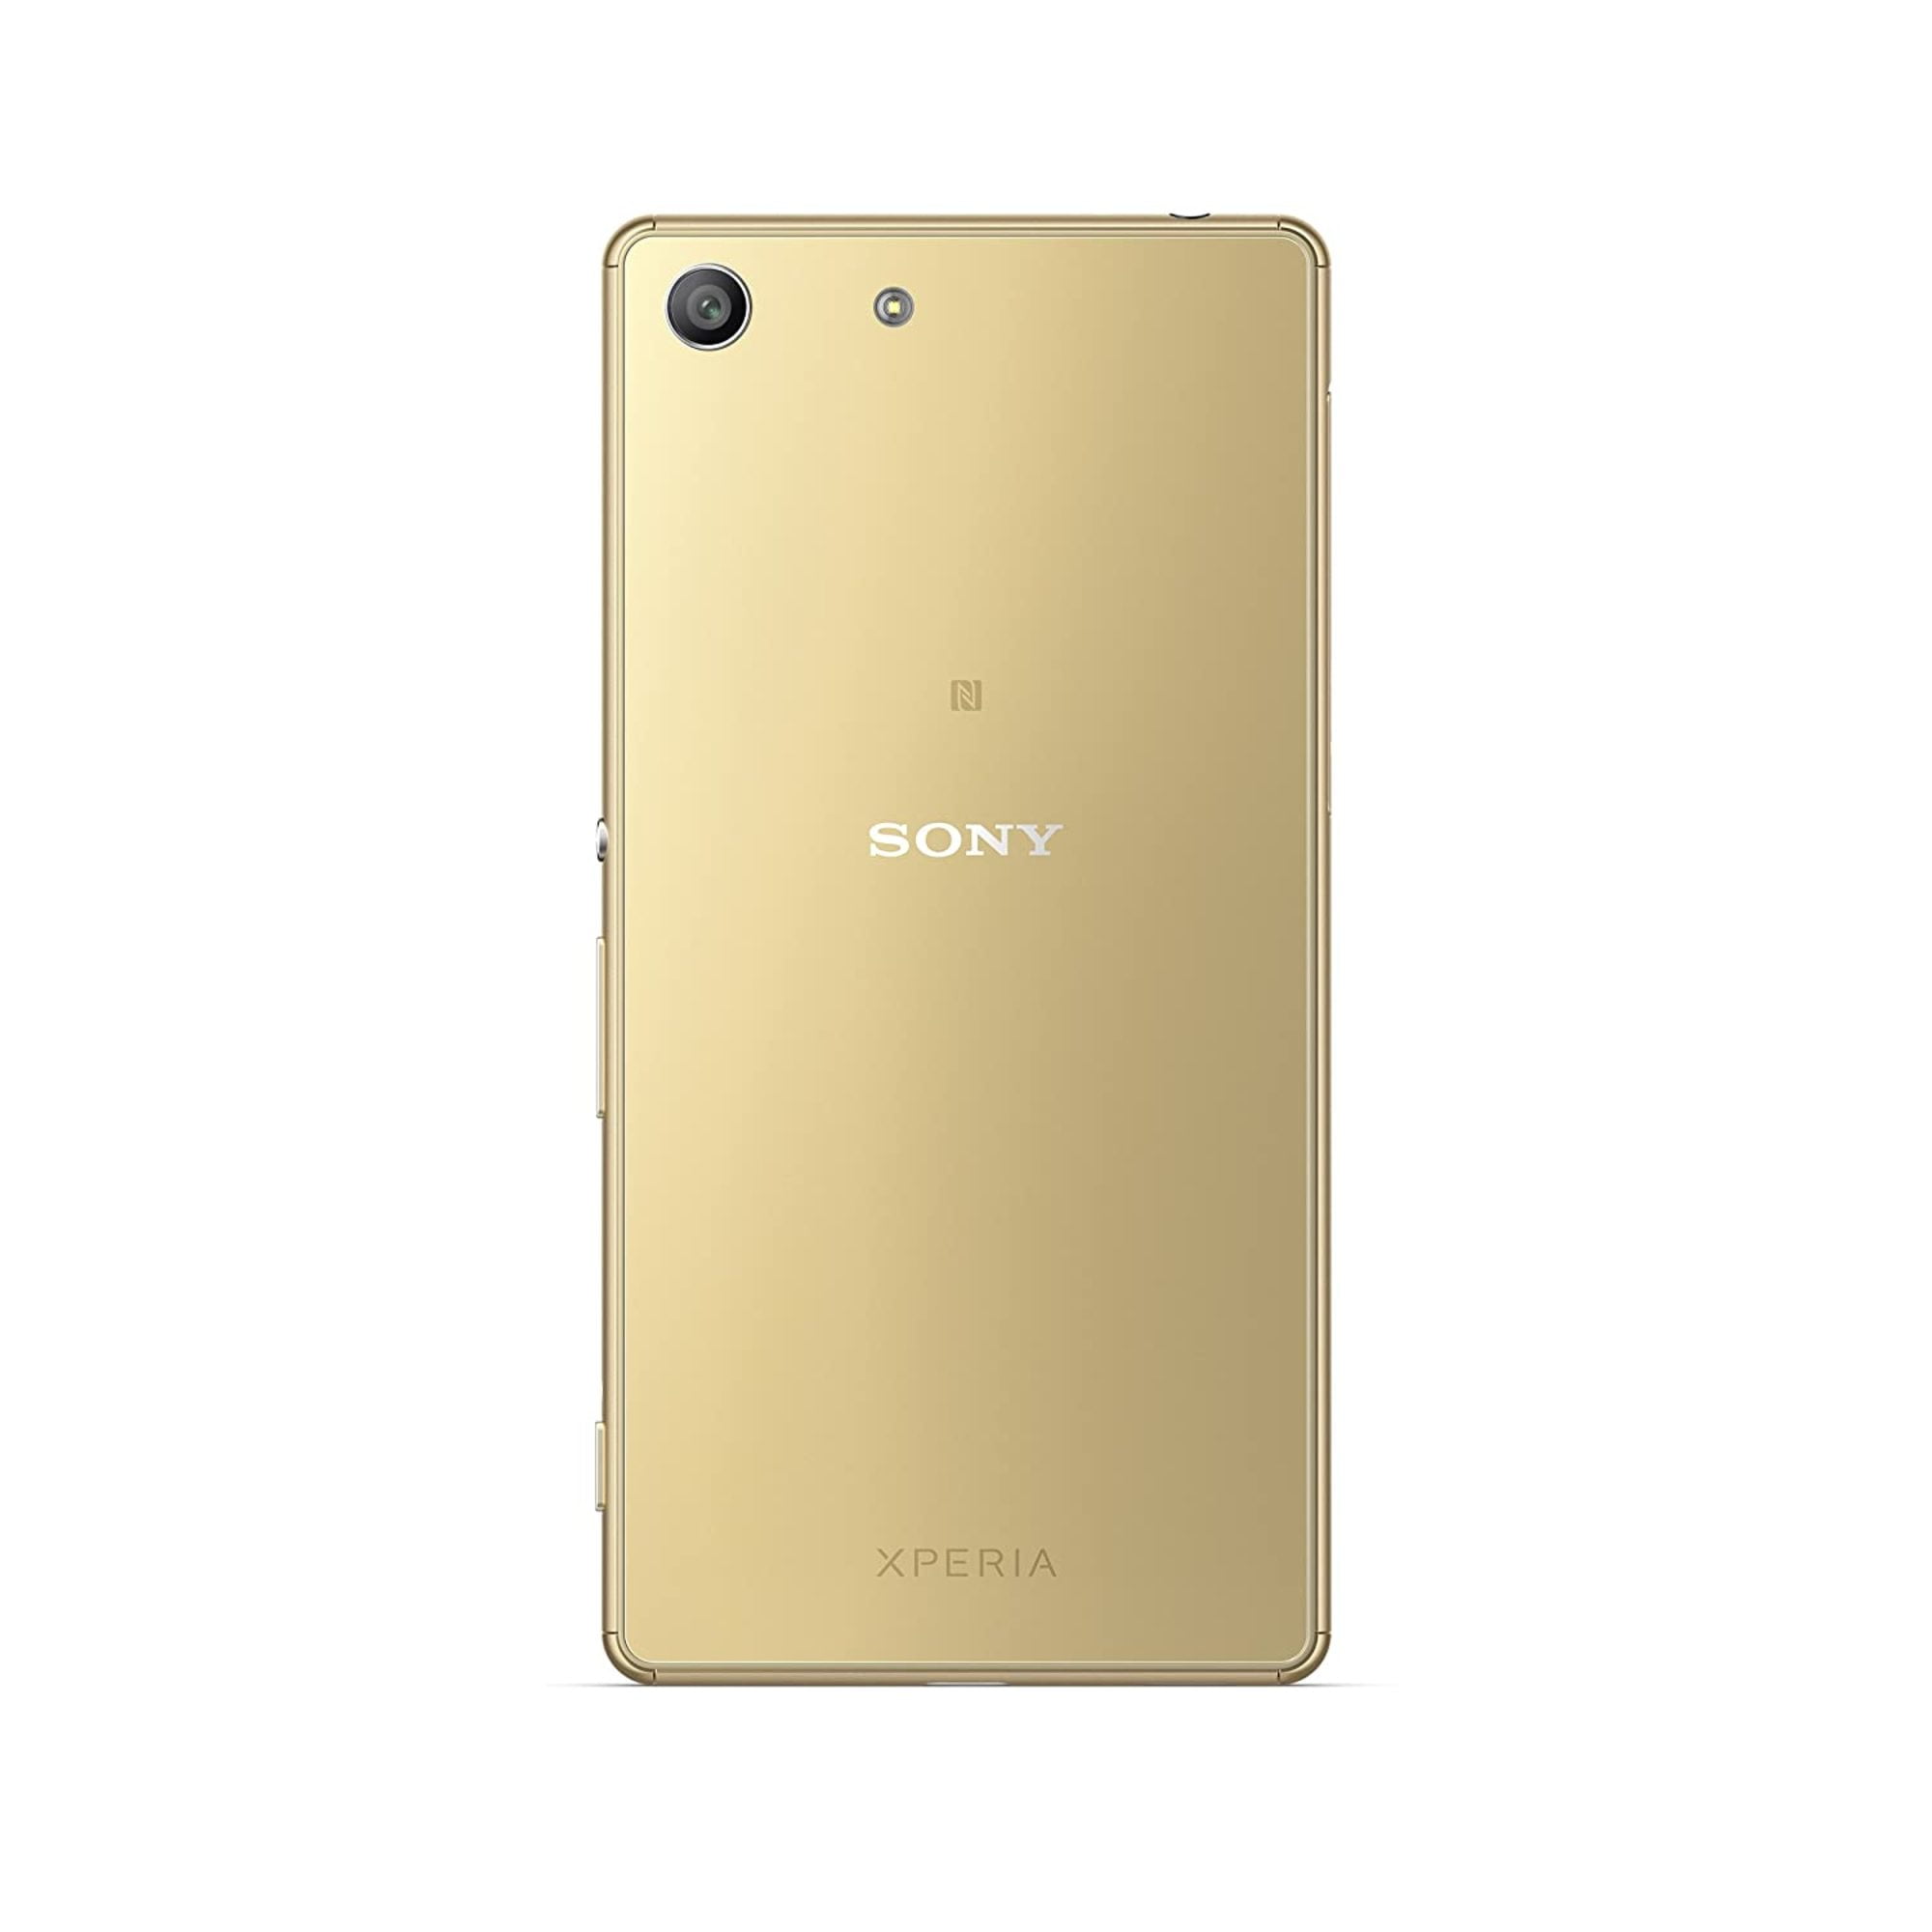 Kostbaar Ieder pik Sony Xperia M5 E5606 16GB GSM Unlocked Android SmartPhone - Gold -  Walmart.com